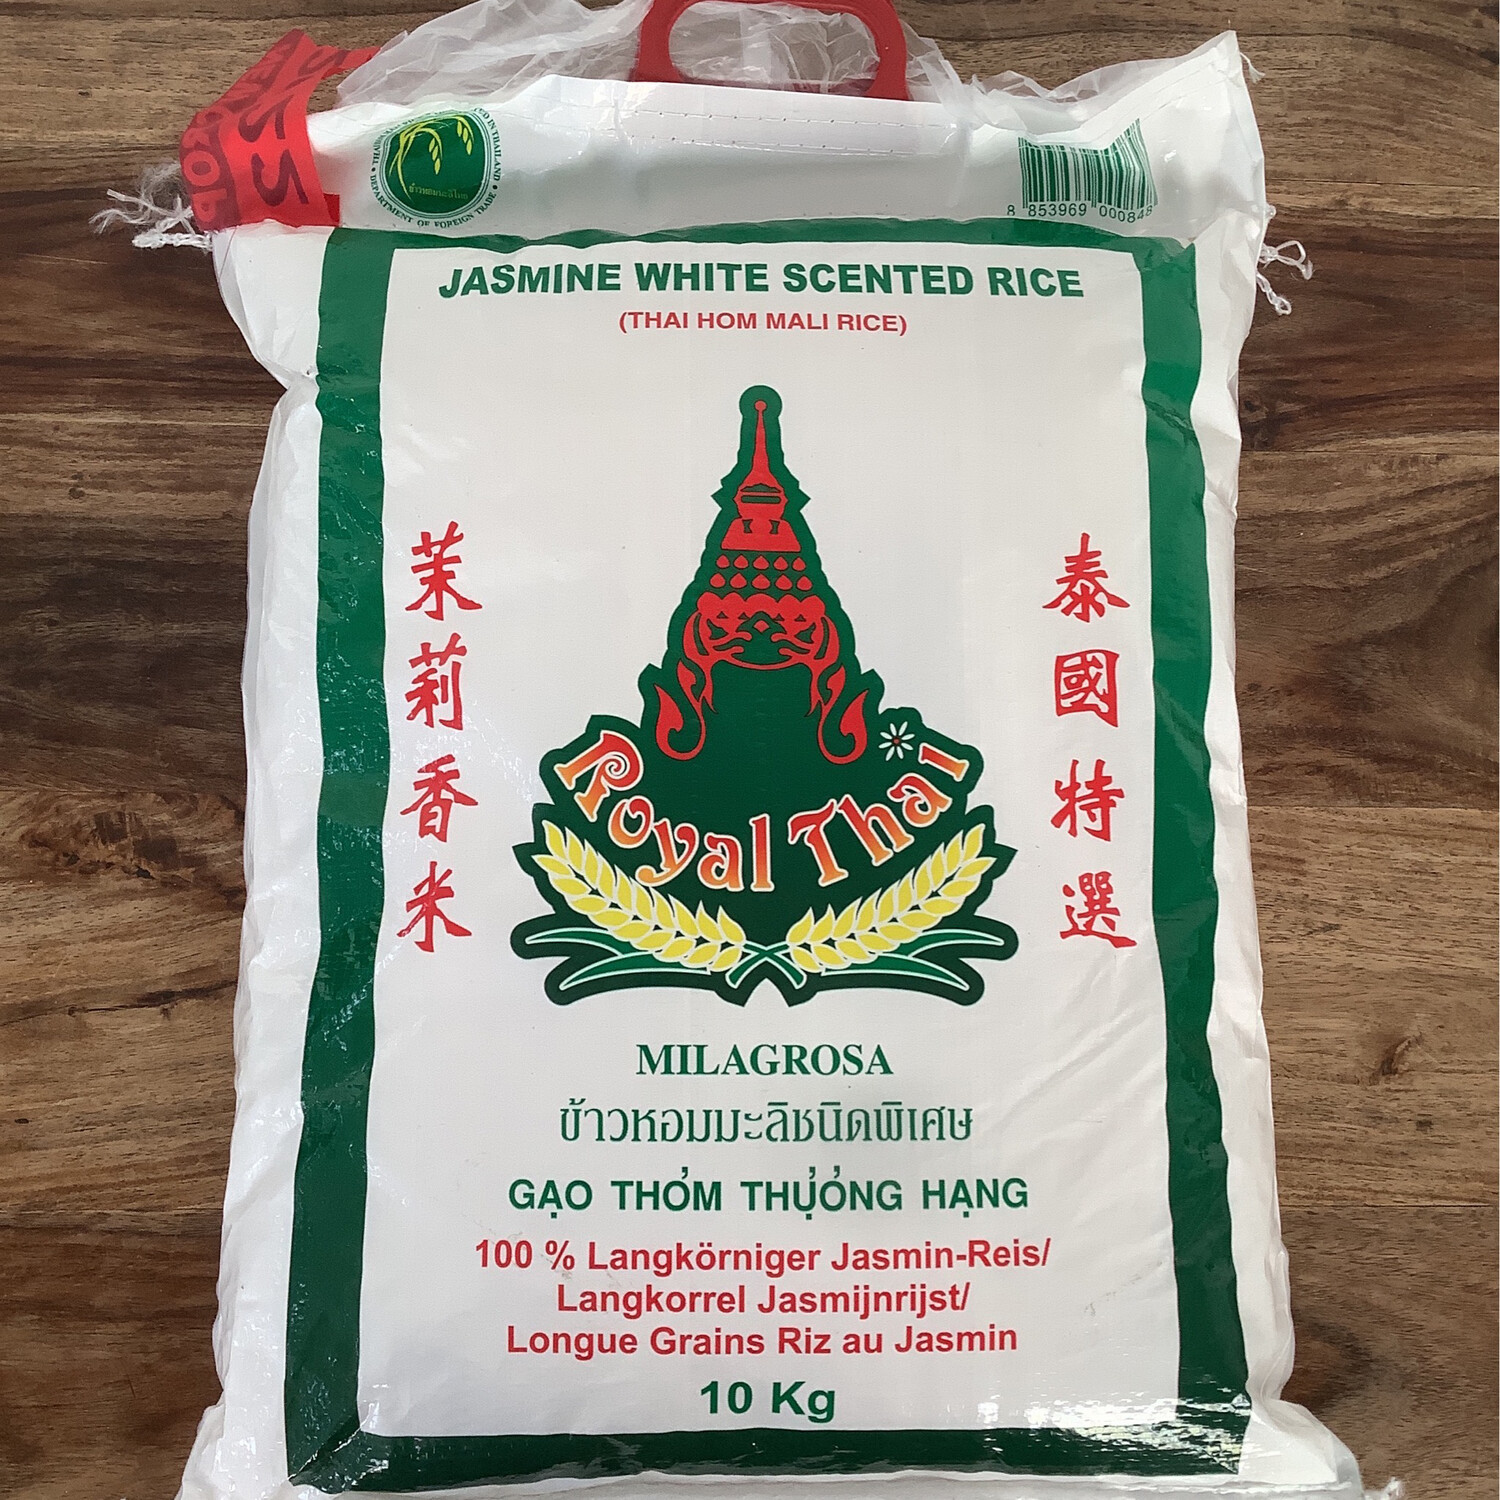 Jasmine White Scented Rice (Thai Hom Mali Rice) 10kg